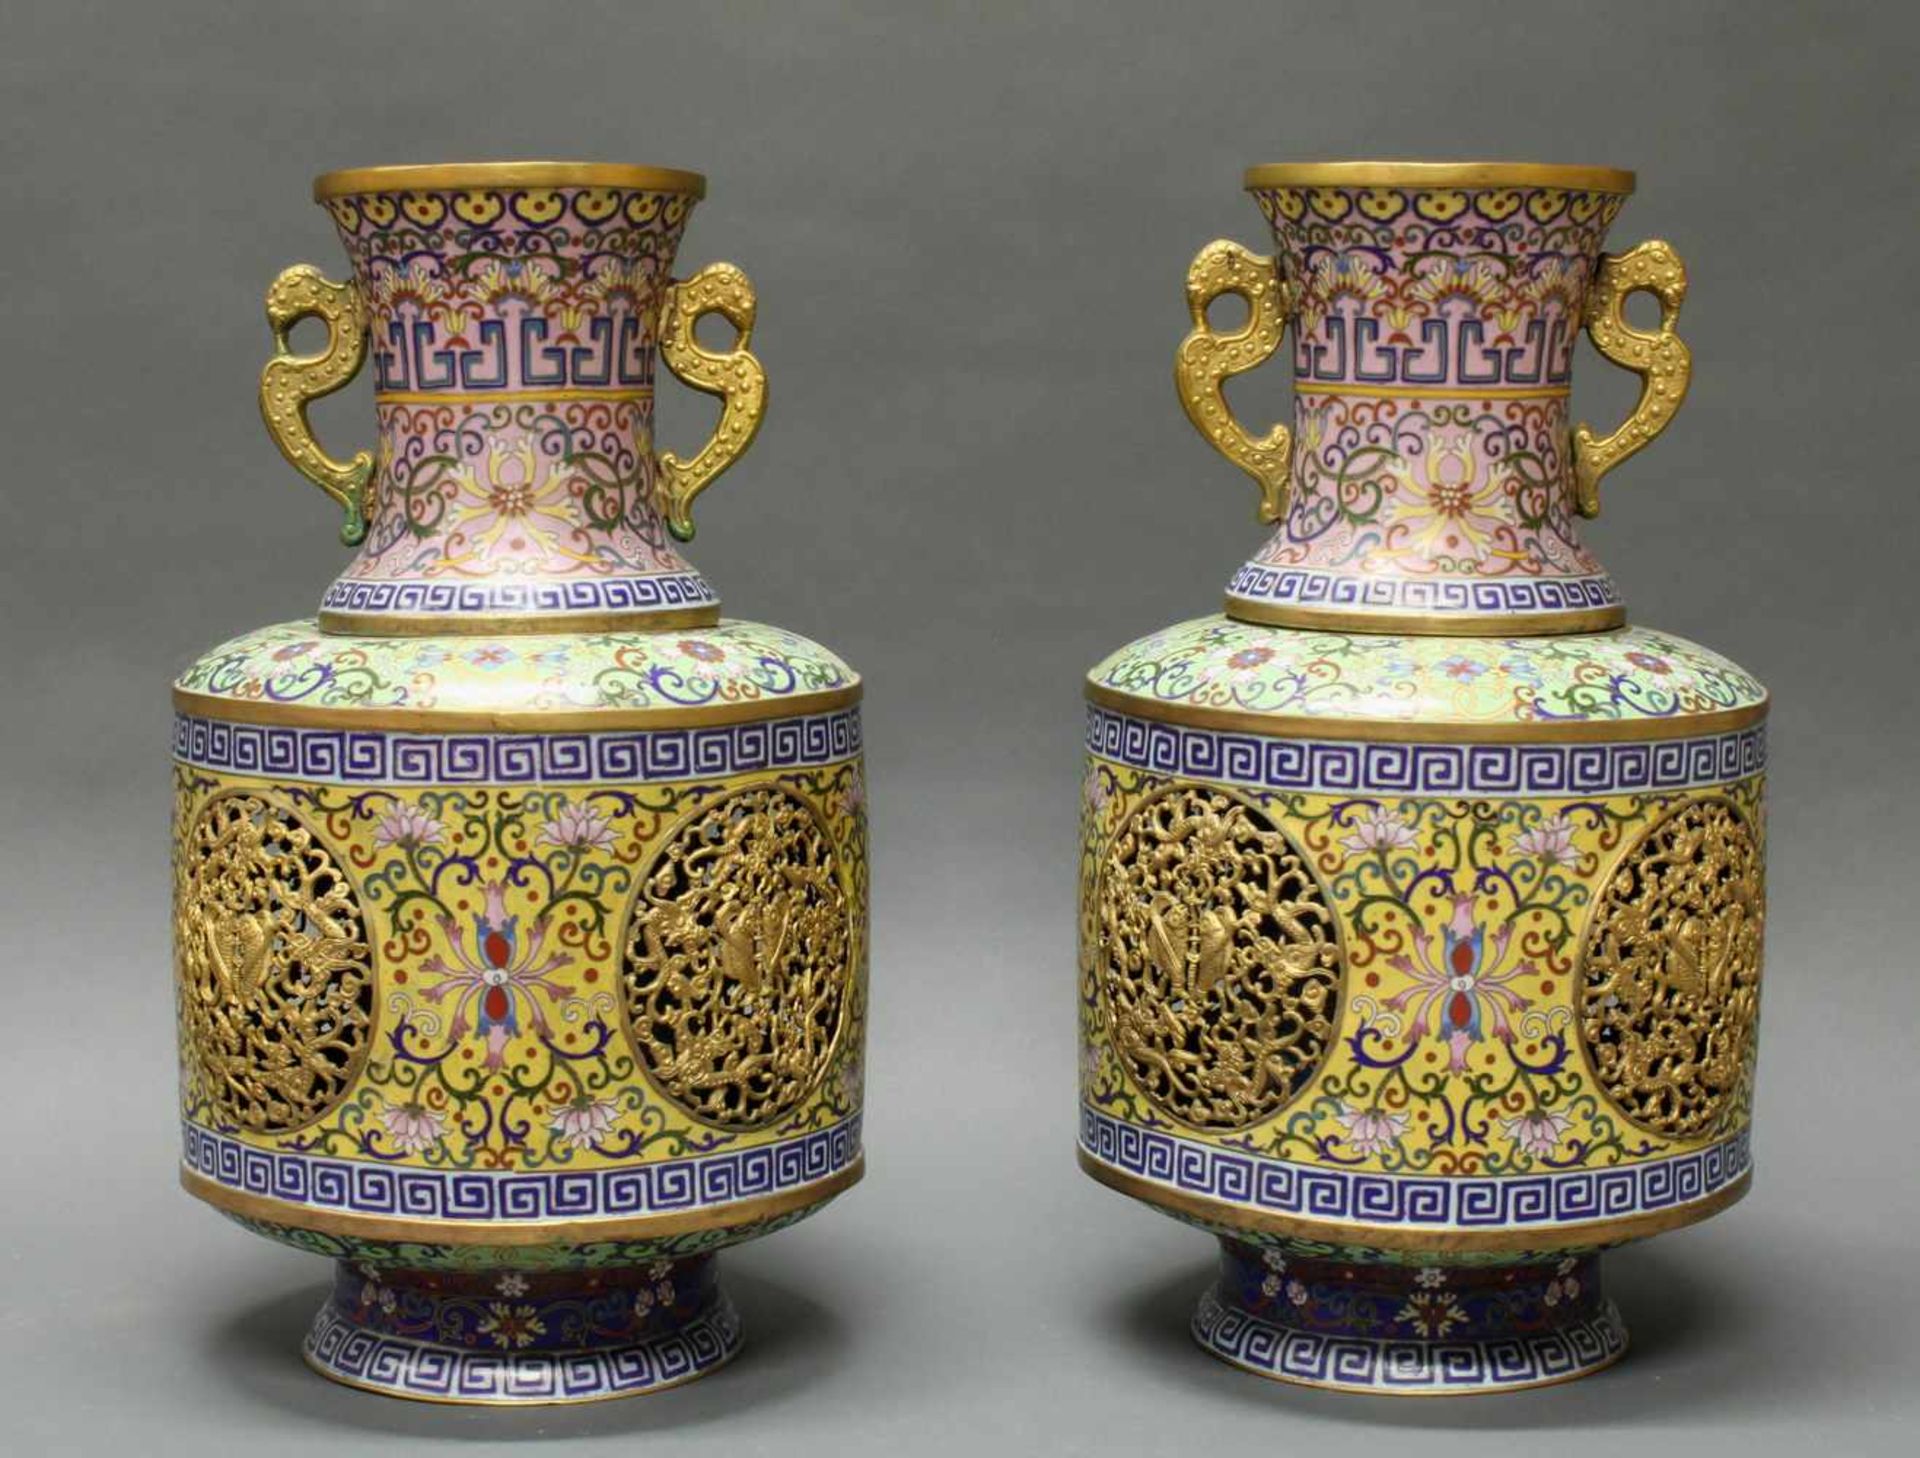 Paar Vasen, China, um 1900, Cloisonné, doppelwandig, auf niedrigem Fuß, trommelförmiger Korpus, vier